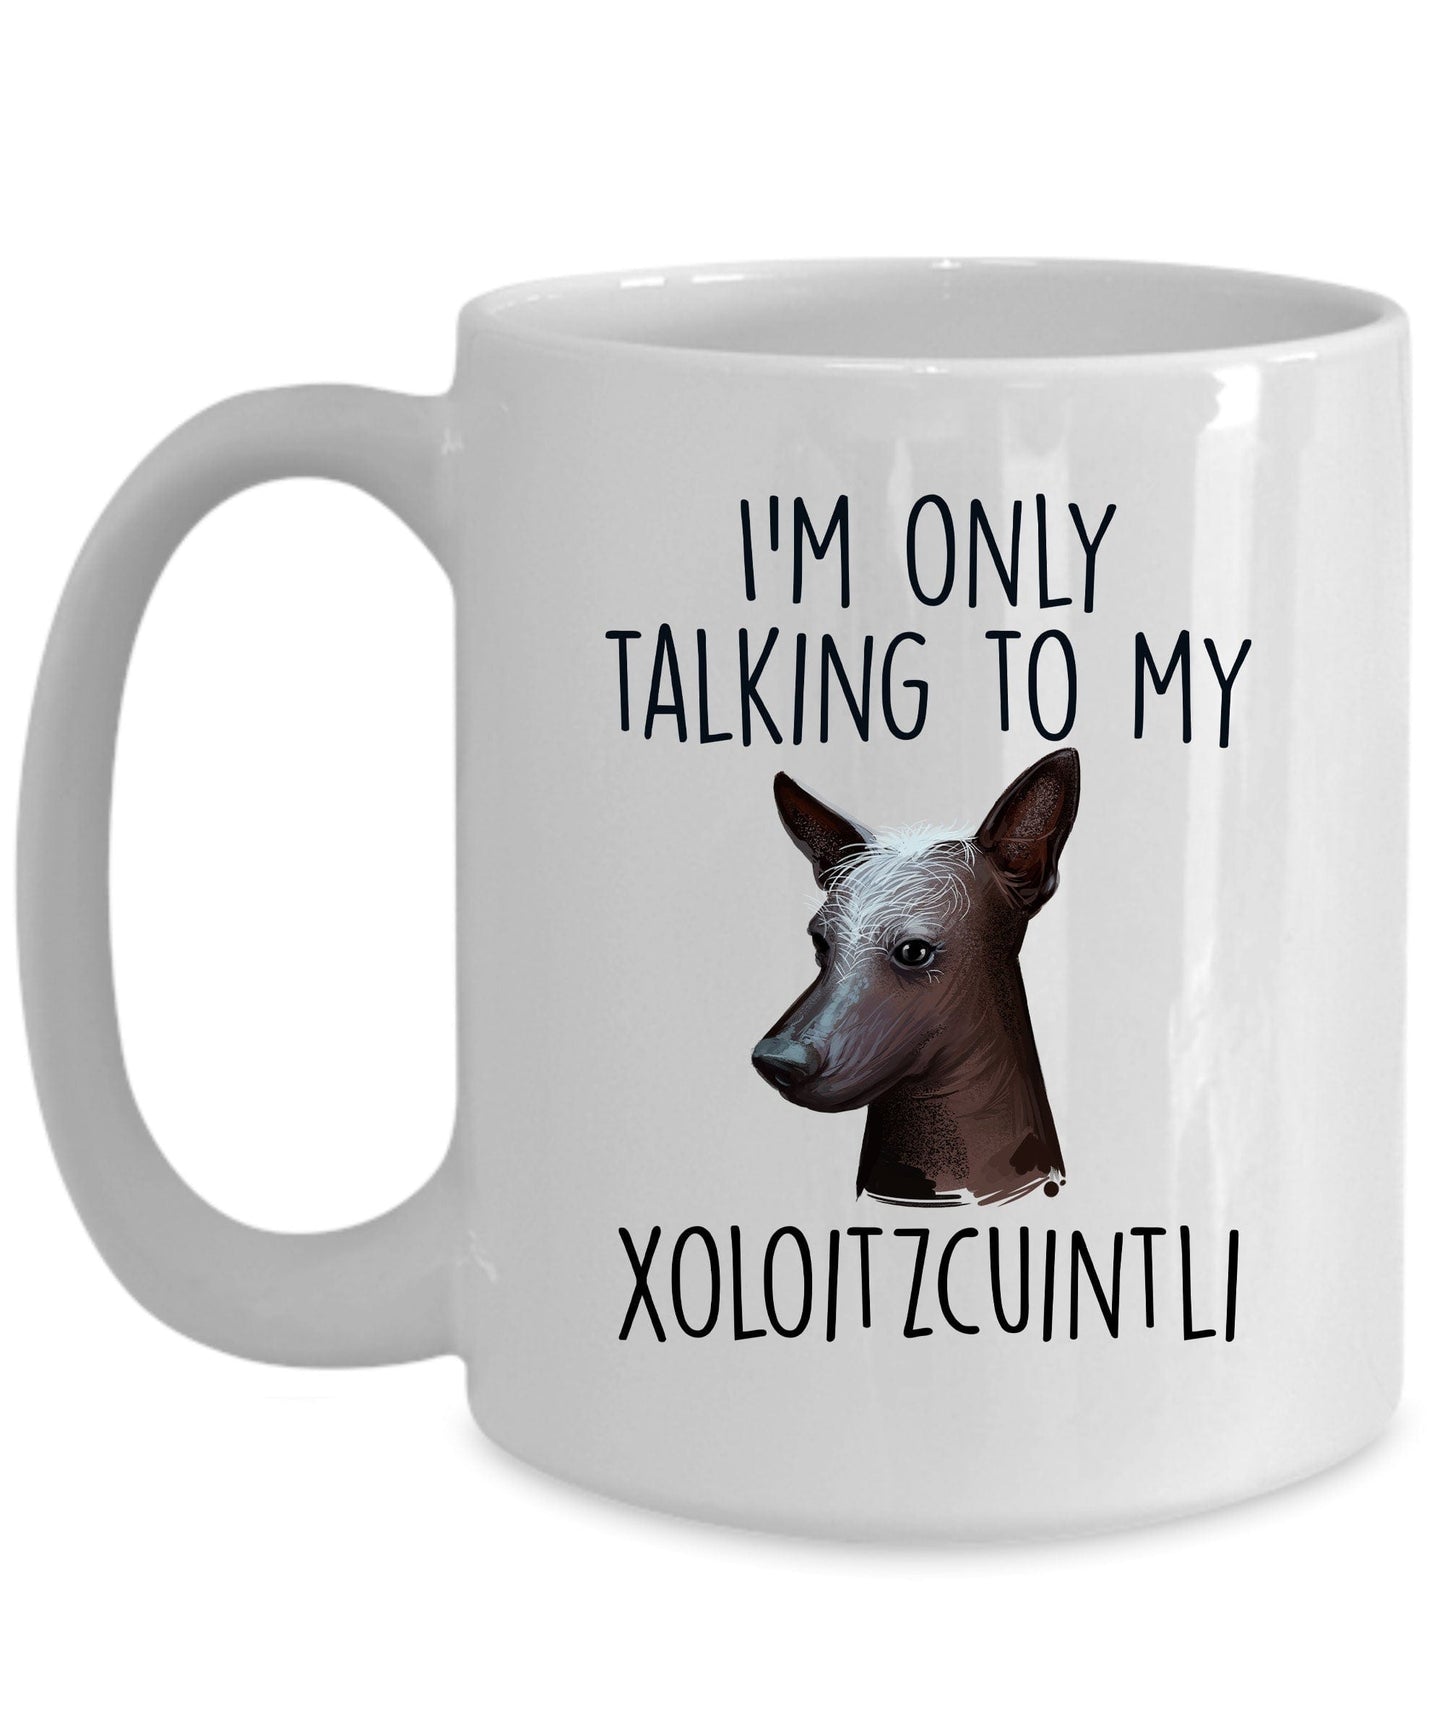 Funny Dog Coffee Mug - I'm Only Talking to my Xoloitzcuintli